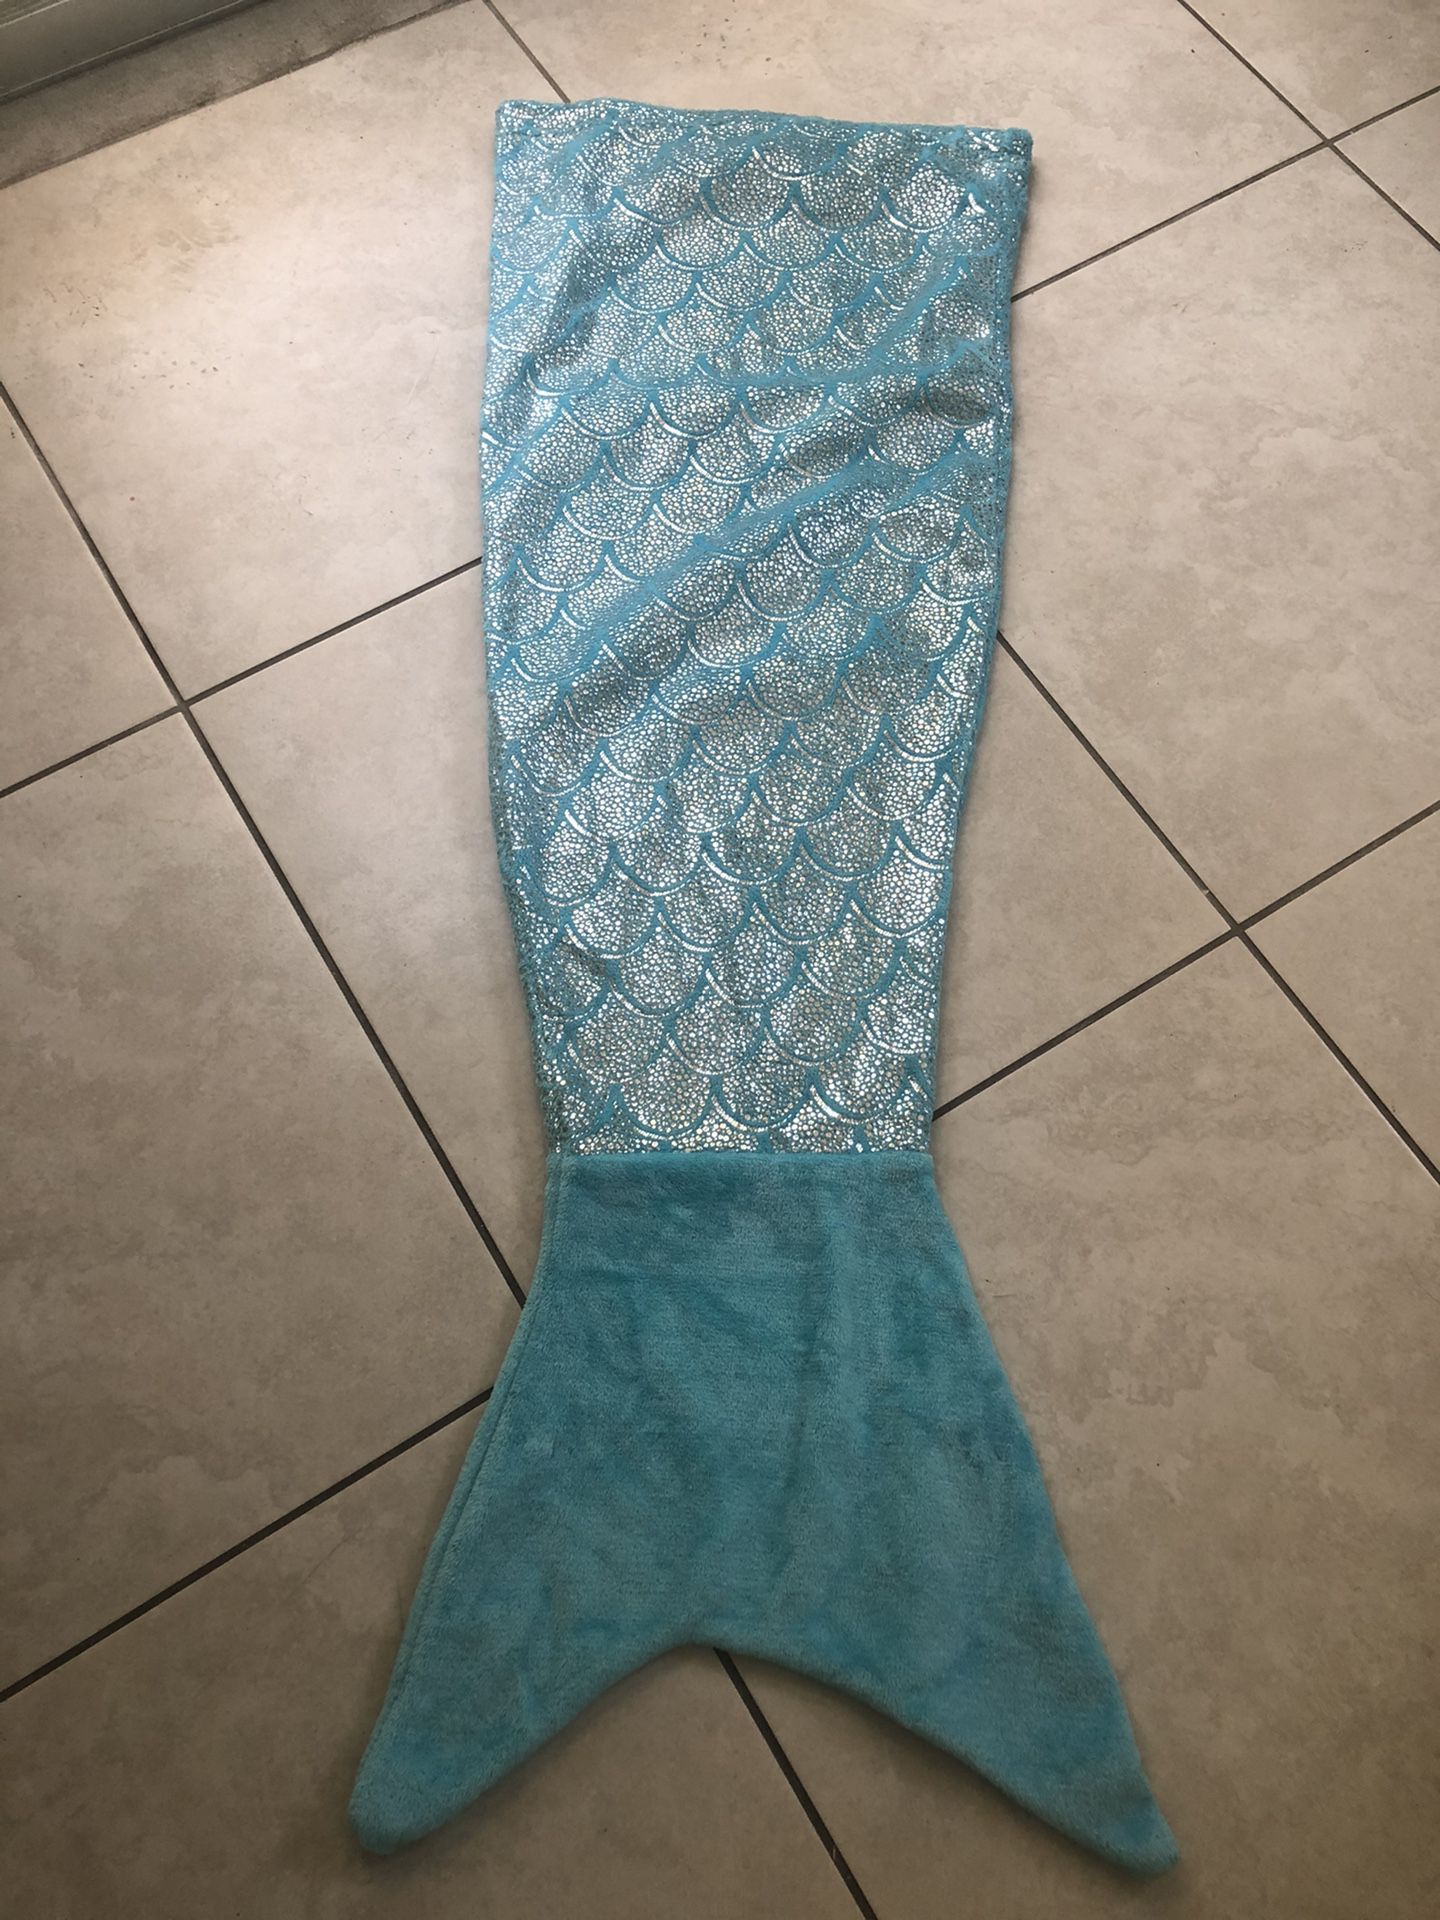 Mermaid tail custome